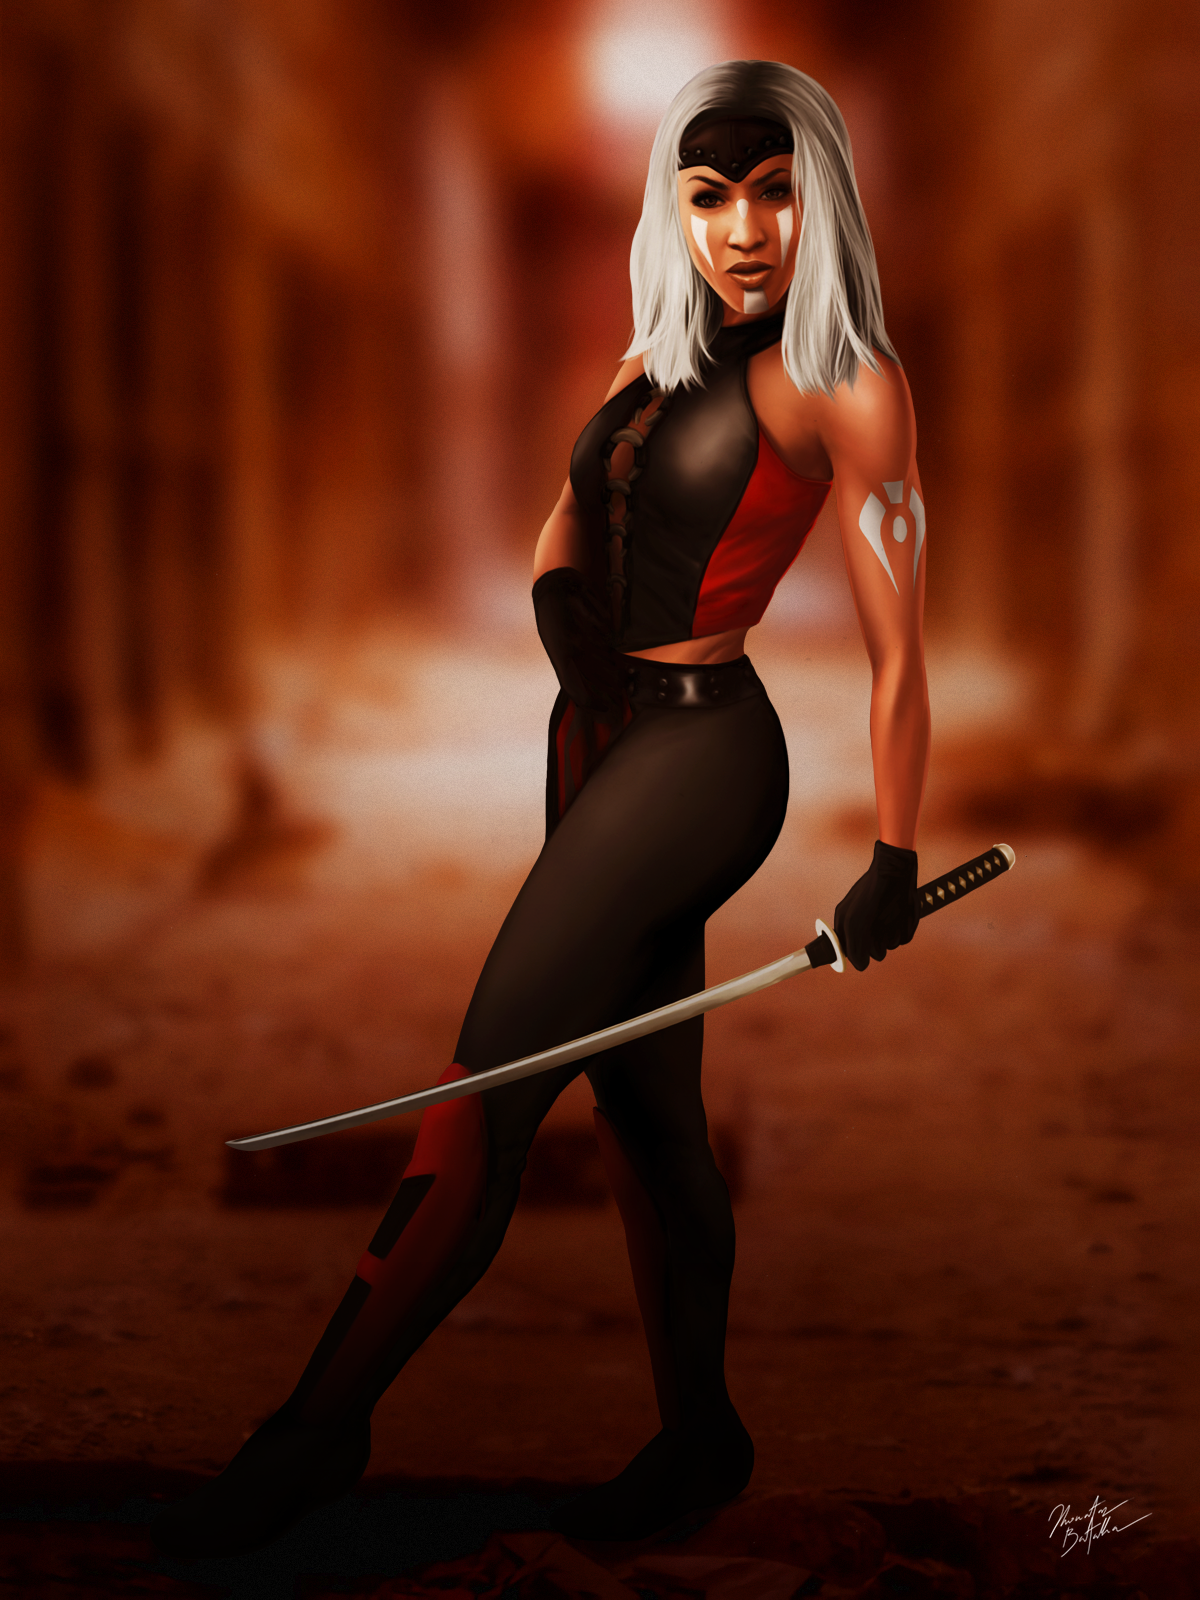 Mortal Kombat 4: Tanya by JhonatasBatalha on DeviantArt